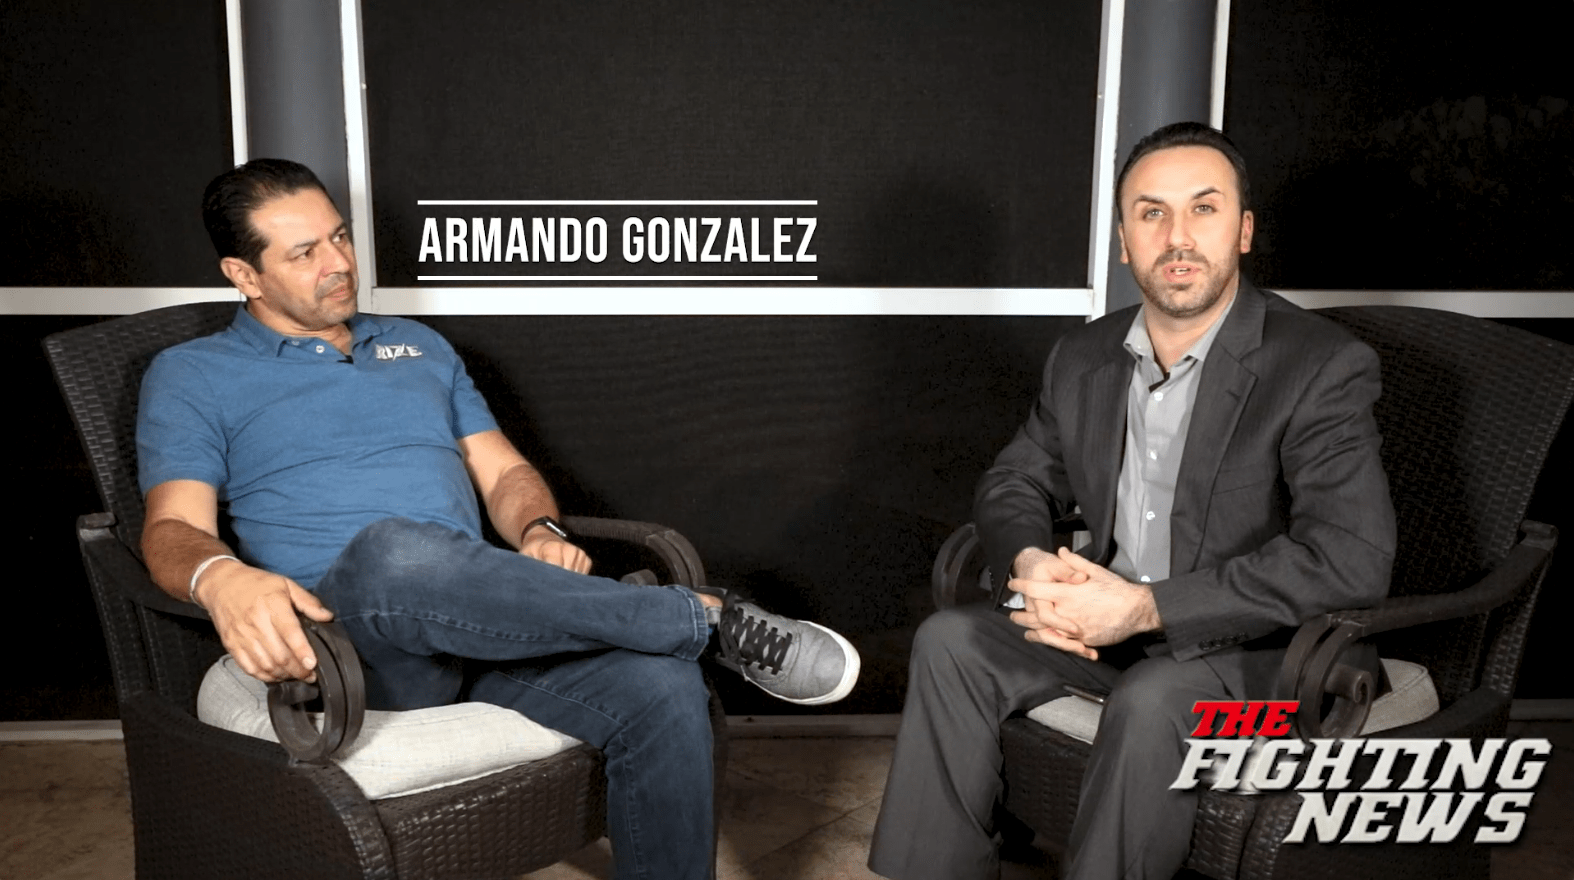 Armando Gonzalez RIZE FC CEO interviewed